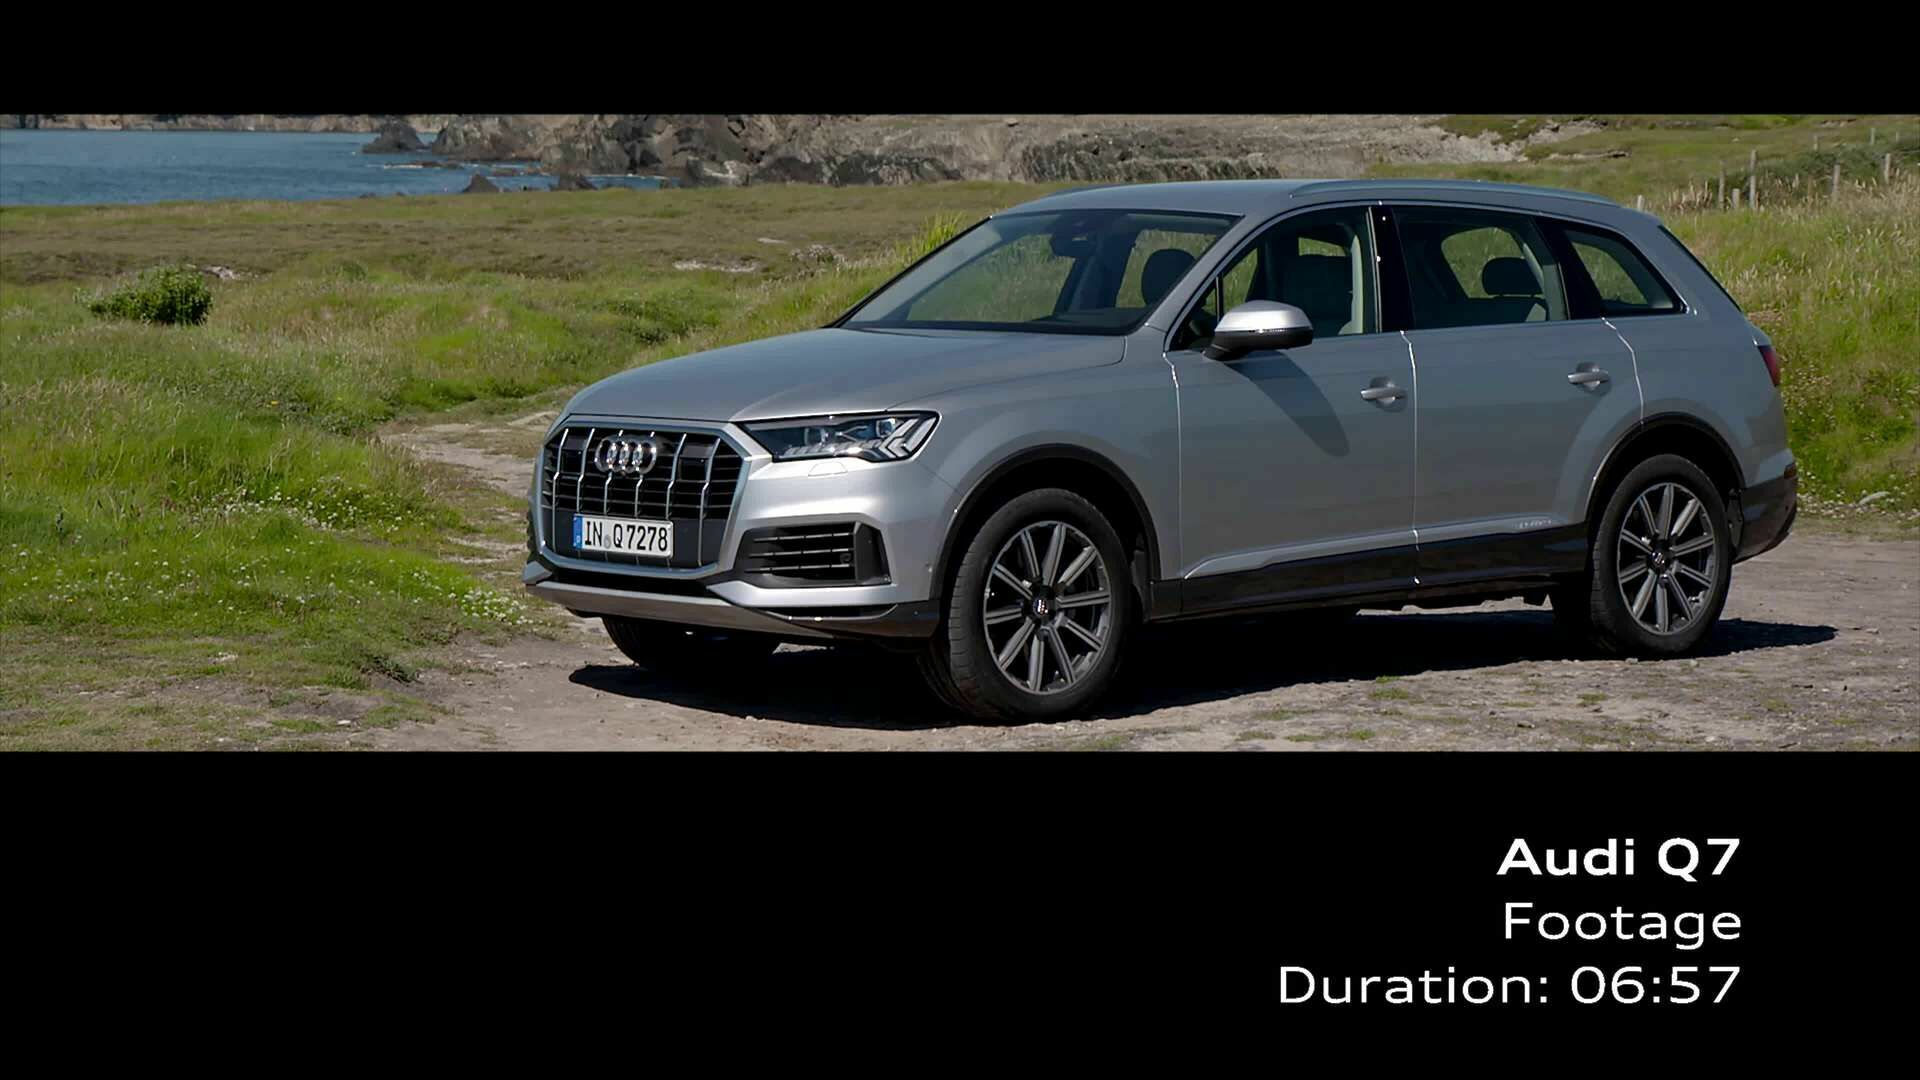 Audi Q7 Florett Silver (Footage)